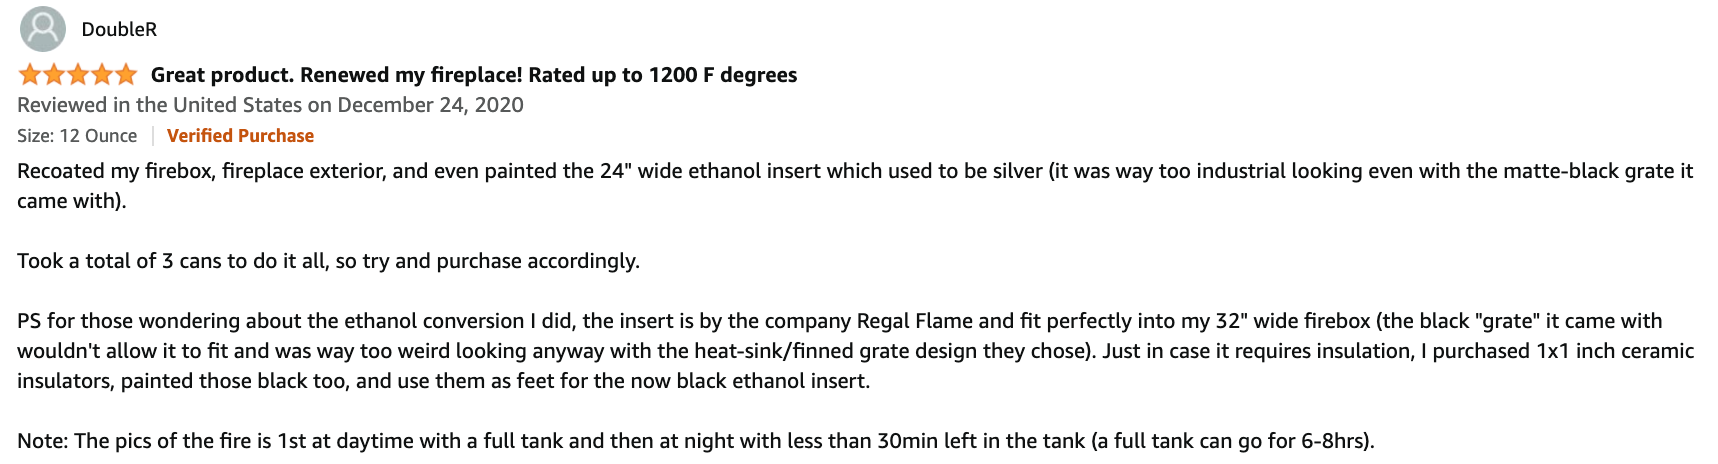 rust-oleum high heat spray review